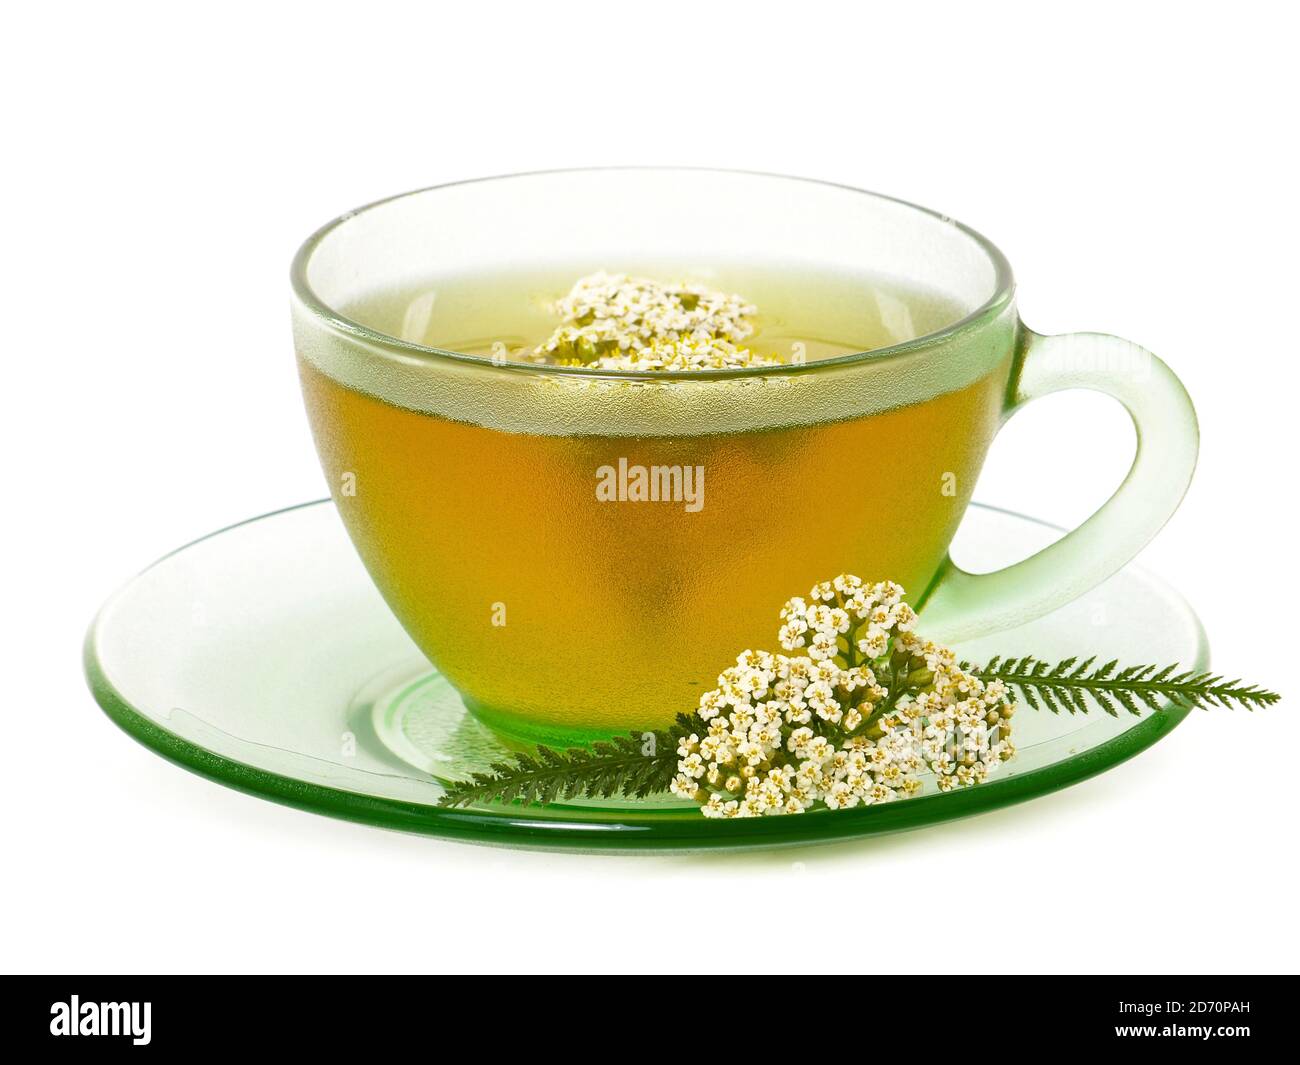 Yarrow tea in a glass cup with fresh yarrow flowers Stock Photo